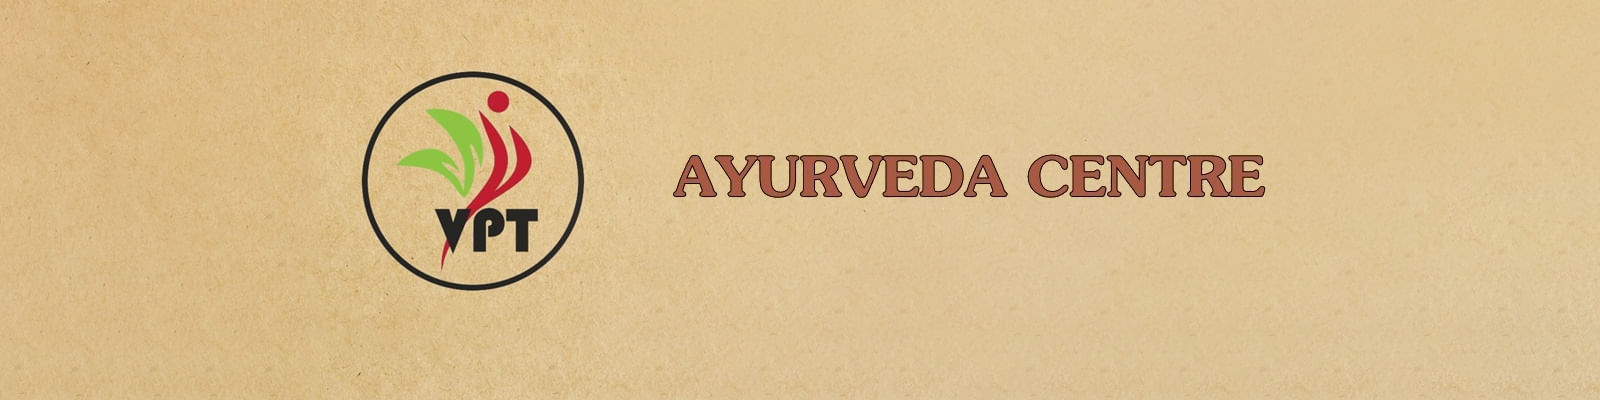 VPT Ayurveda Center